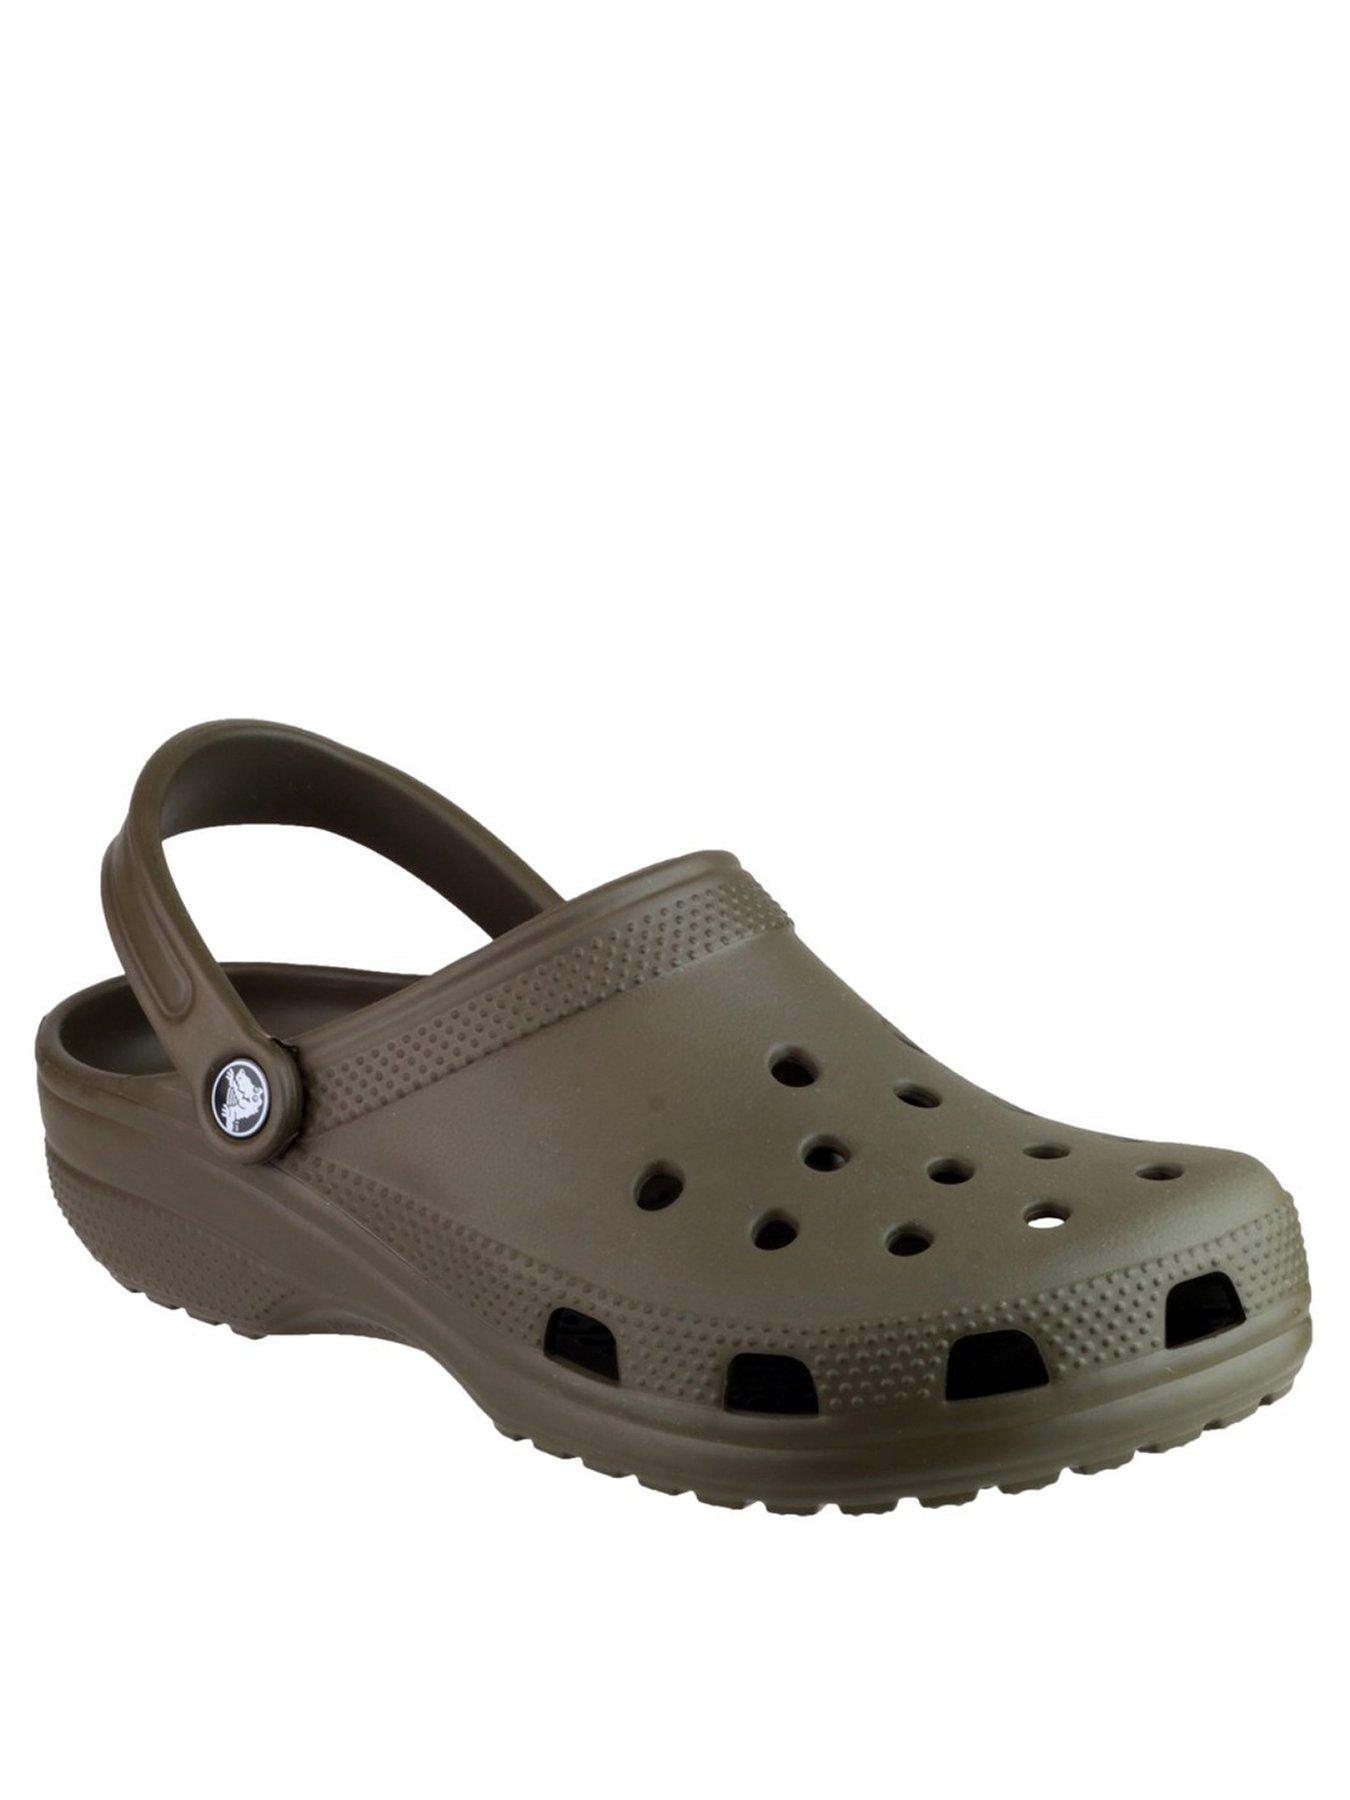 buy crocs ireland